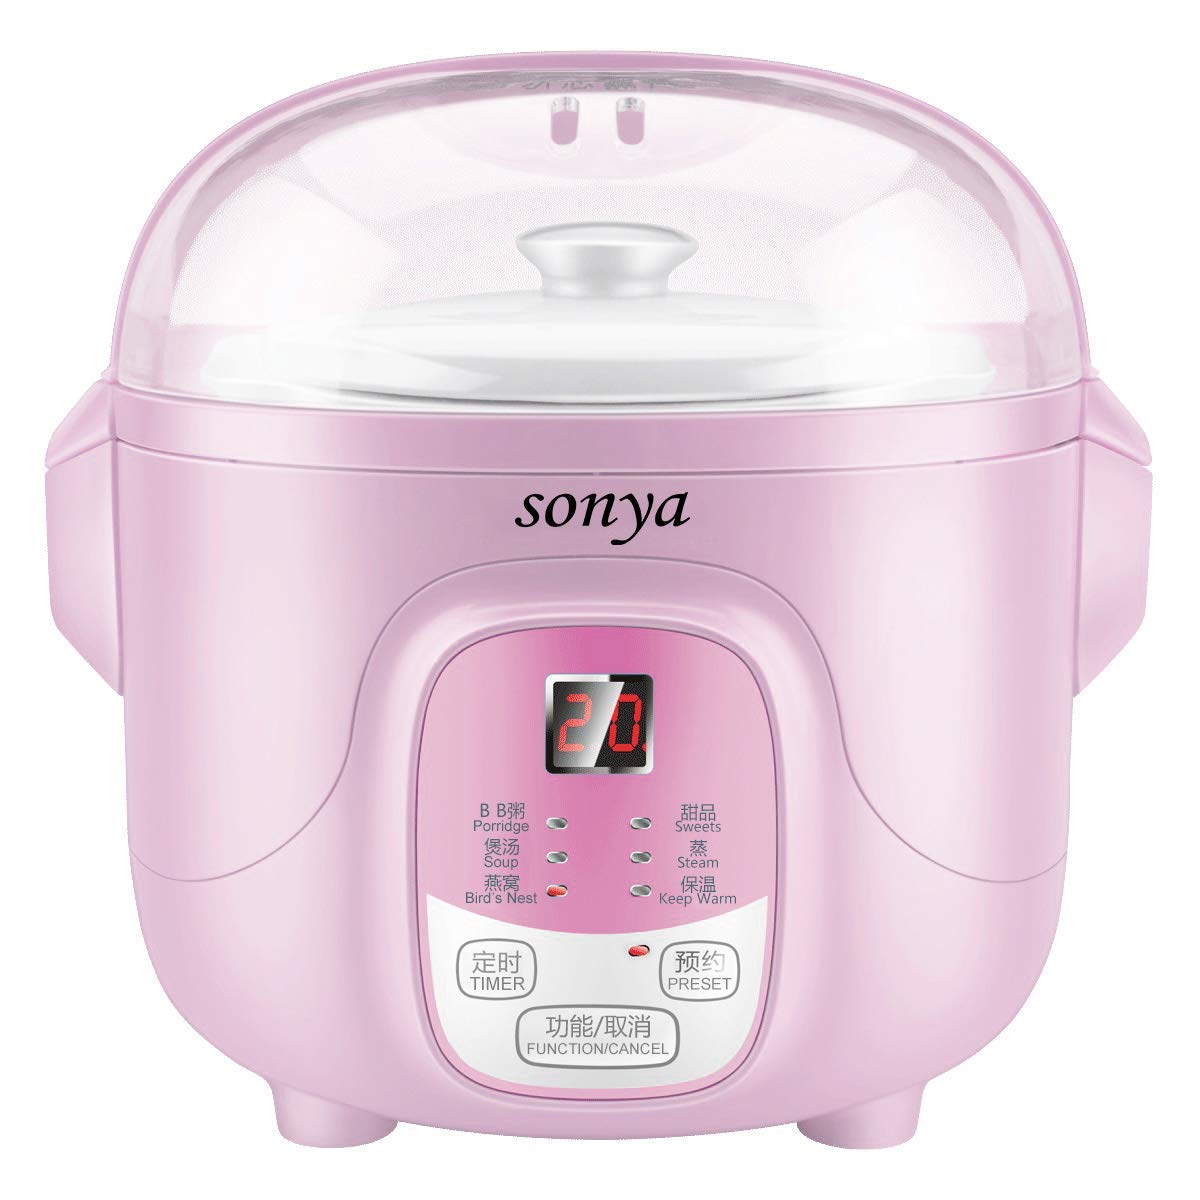 Bonus Pack Sonya Ceramic Pot Smart Electric Slow Stew Pot SY-DGD8P (Pink) - image 1 of 4